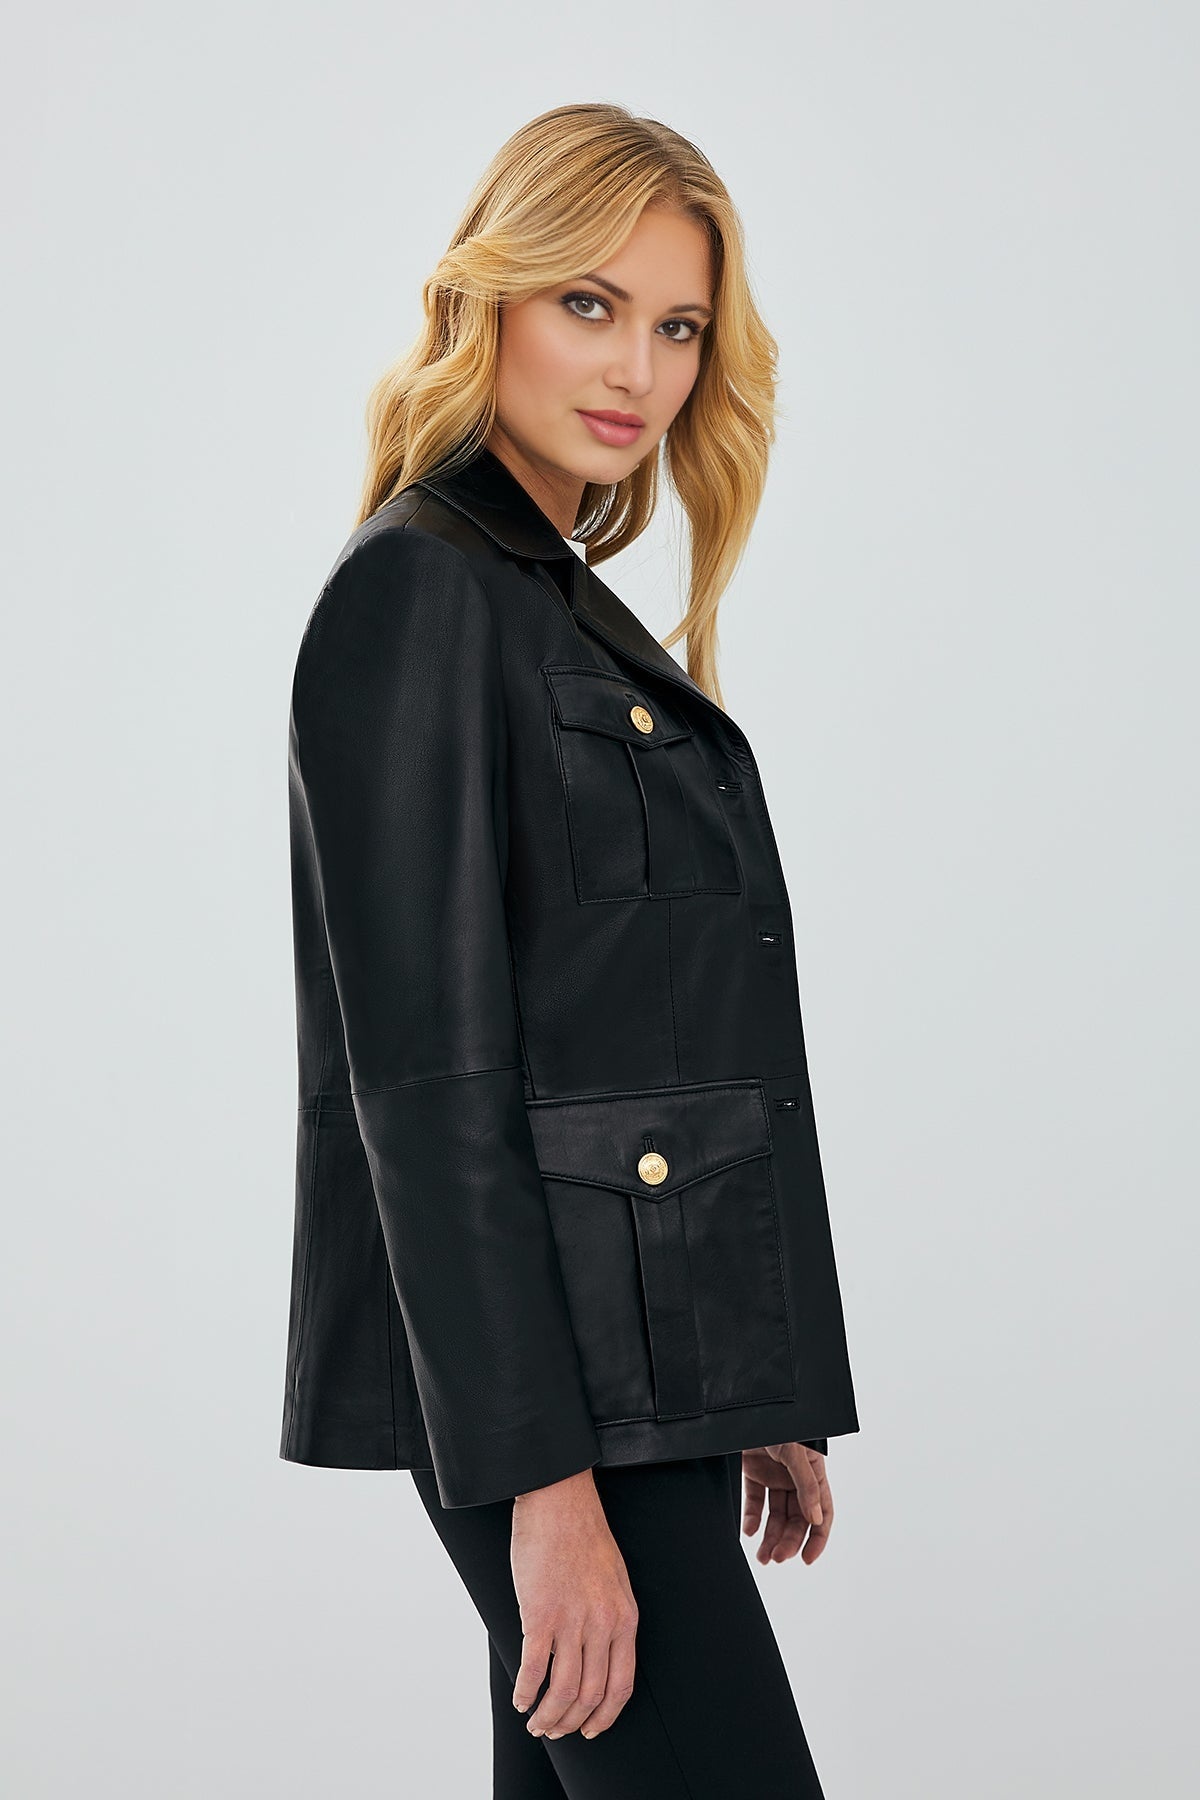 Teresa Black Women's Leather Jacket